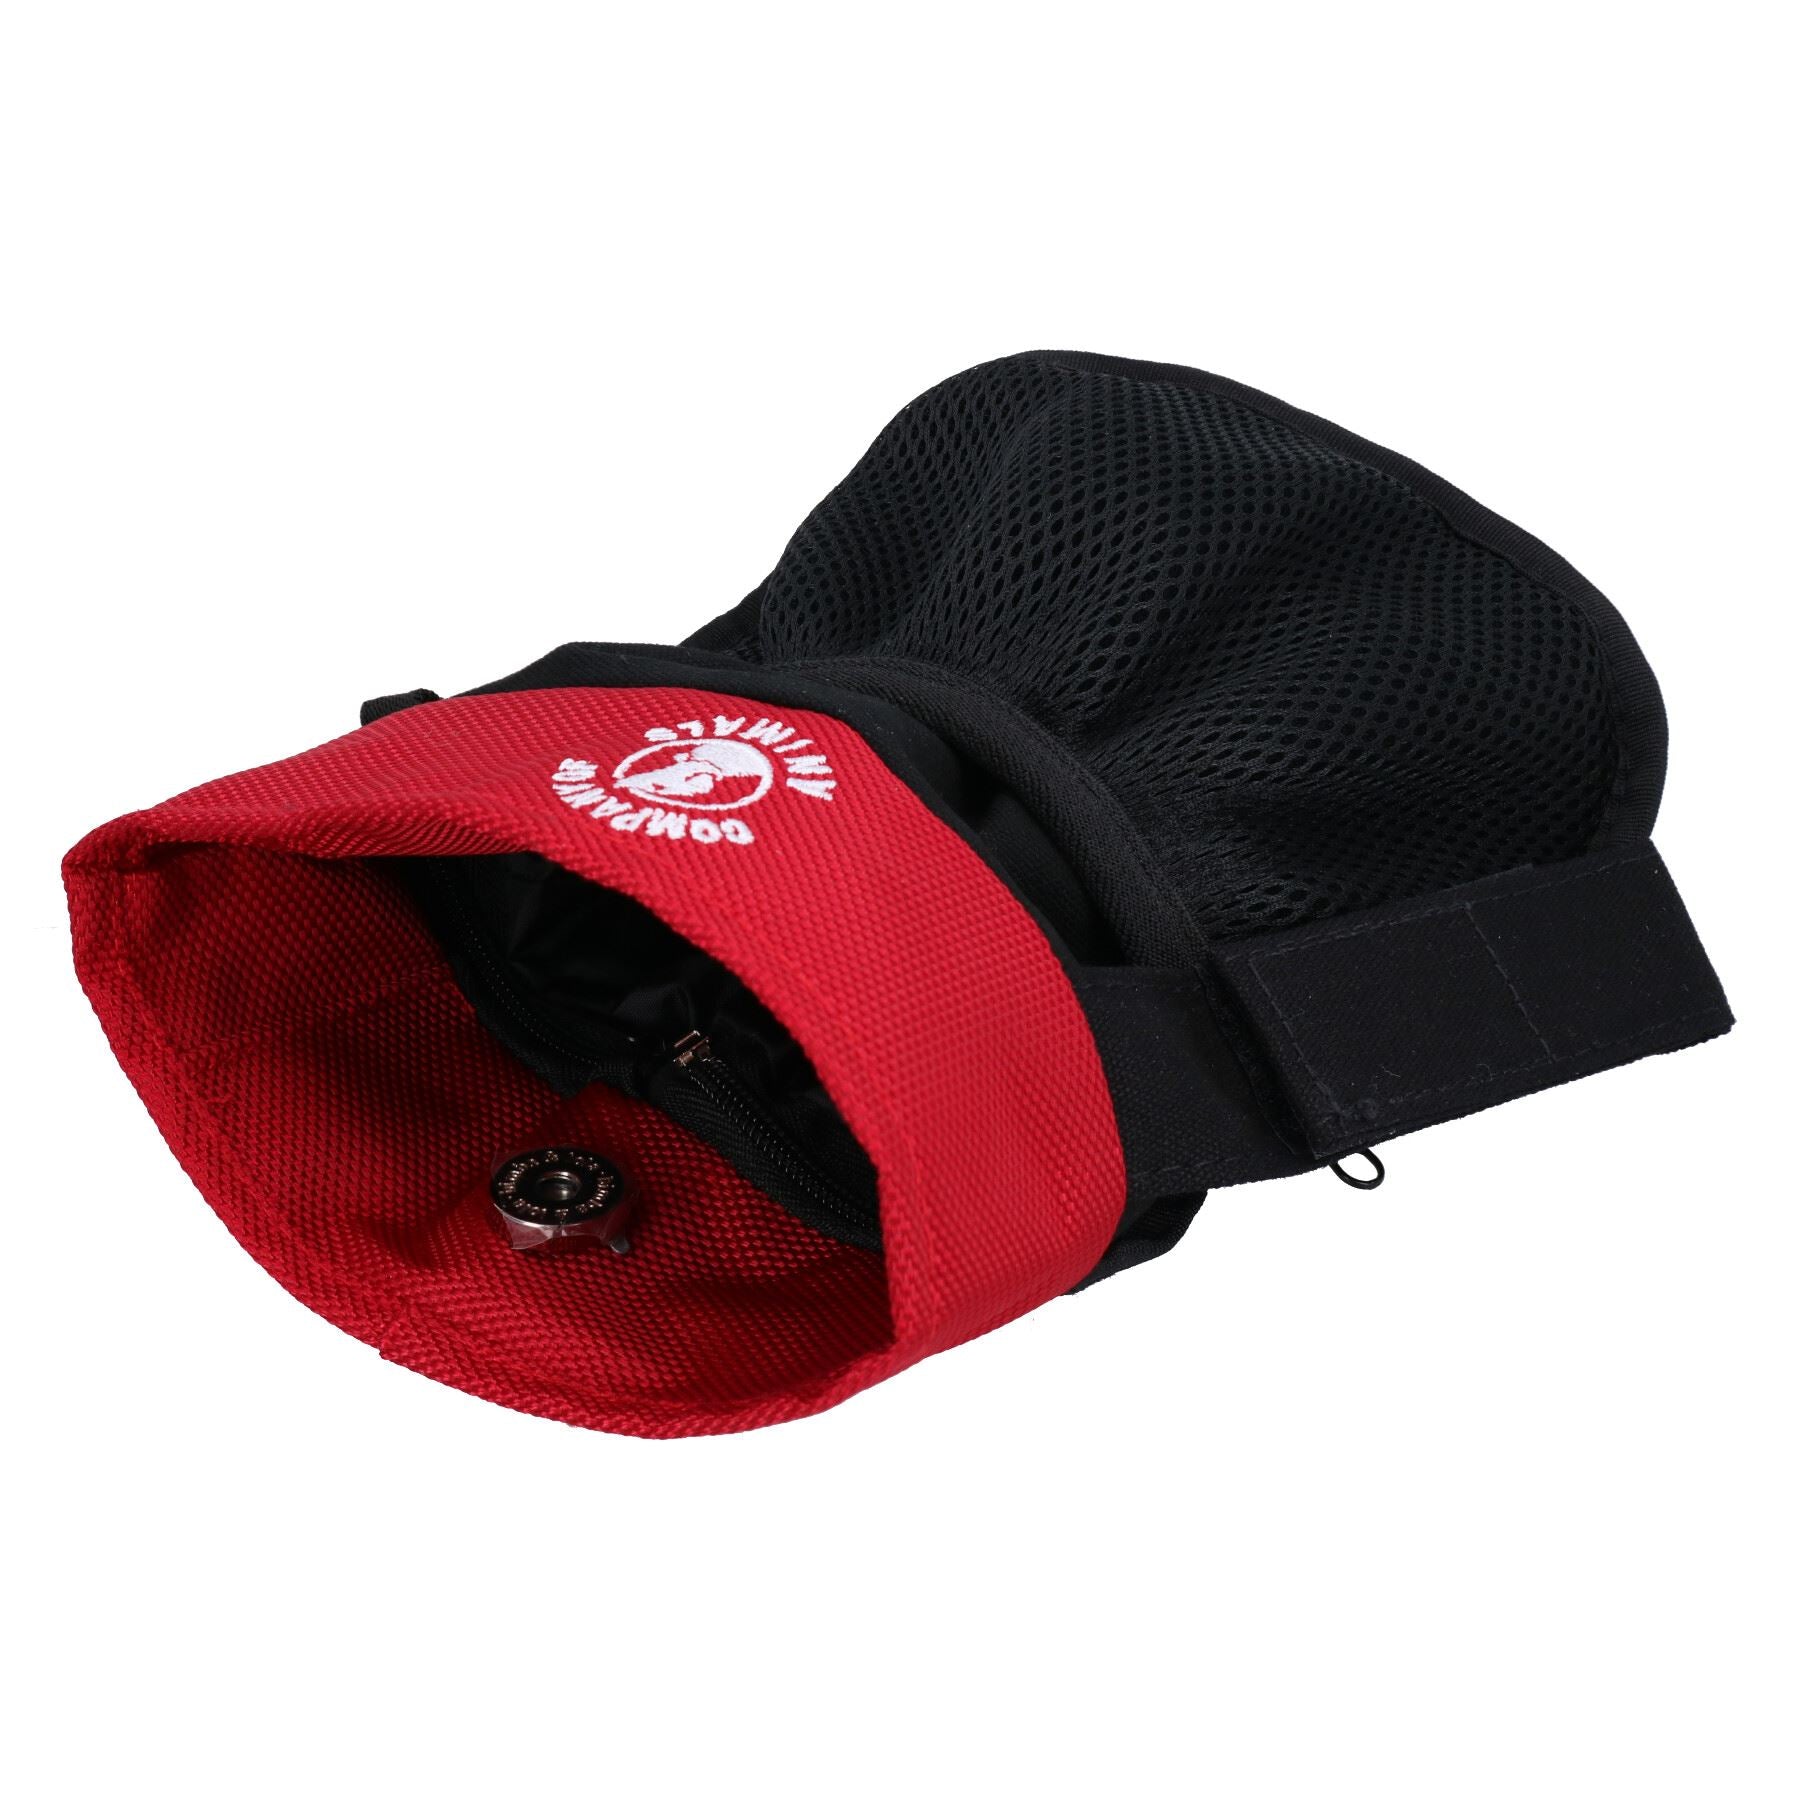 Waterproof Pro Treat Bag Holder Dog Training Essential Reward Magnetic Closure